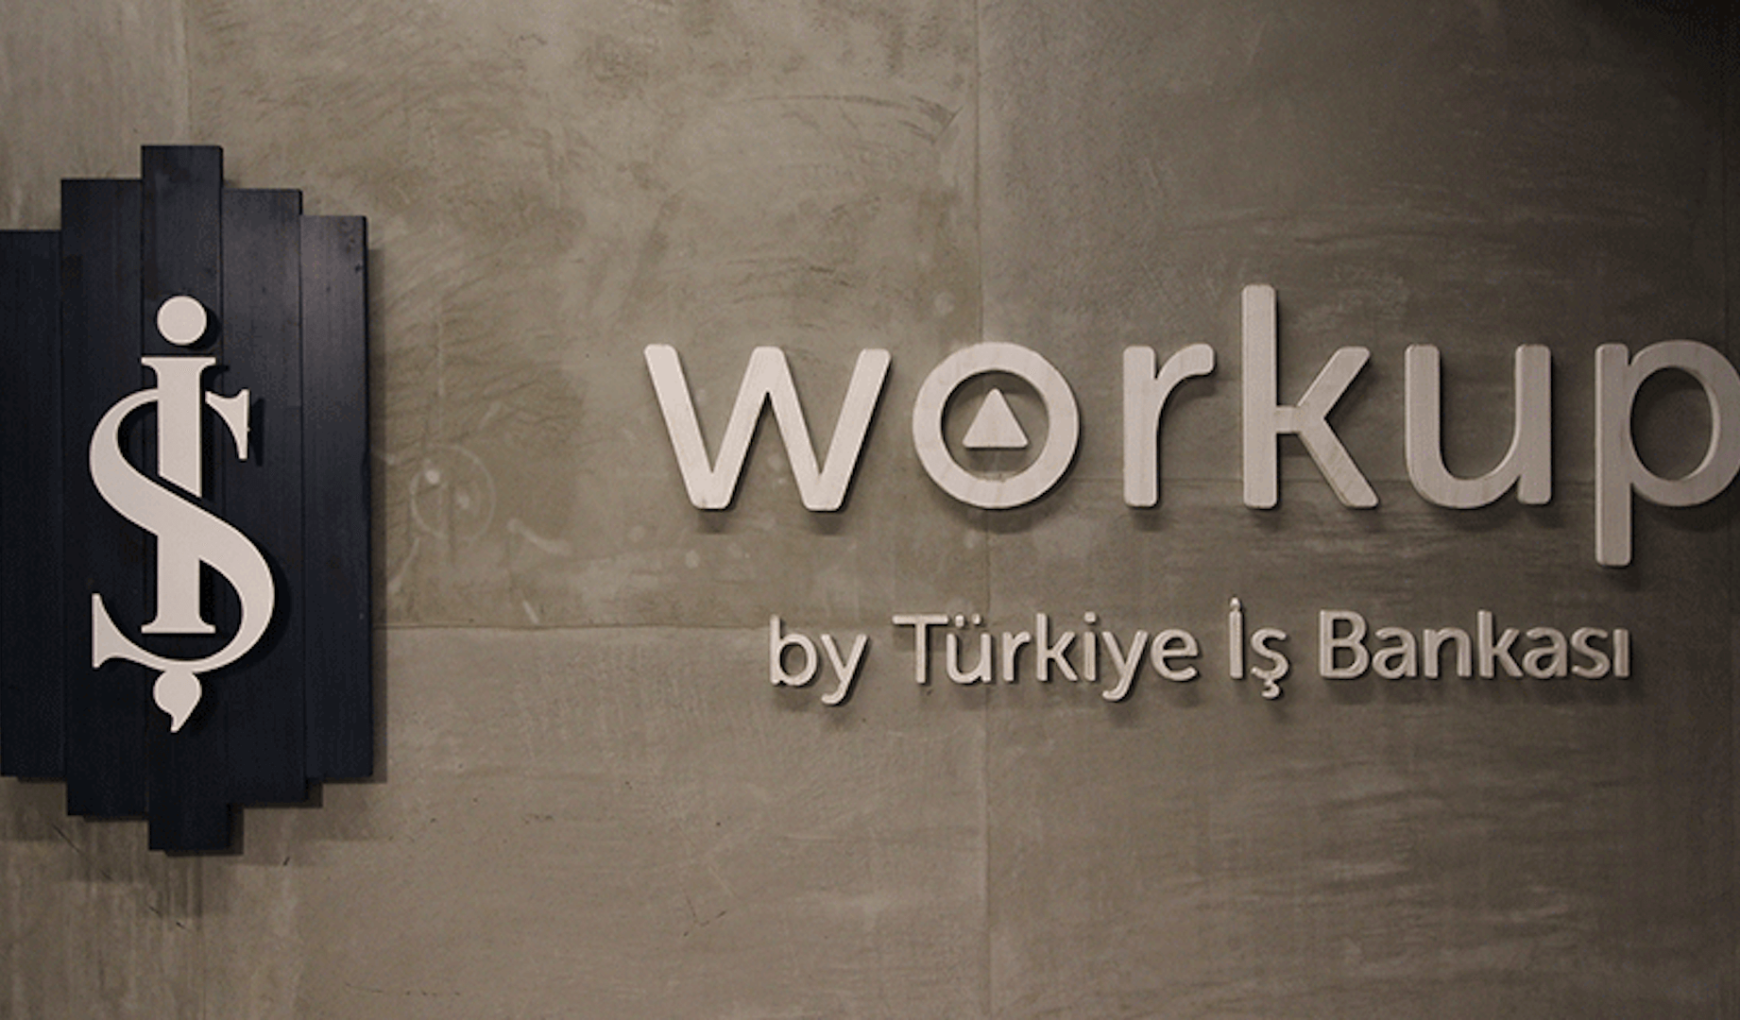 turkiye-is-bankasi-workup-girisimcilik-programi-nin-10-doneminden-8-girisim-mezun-oldu